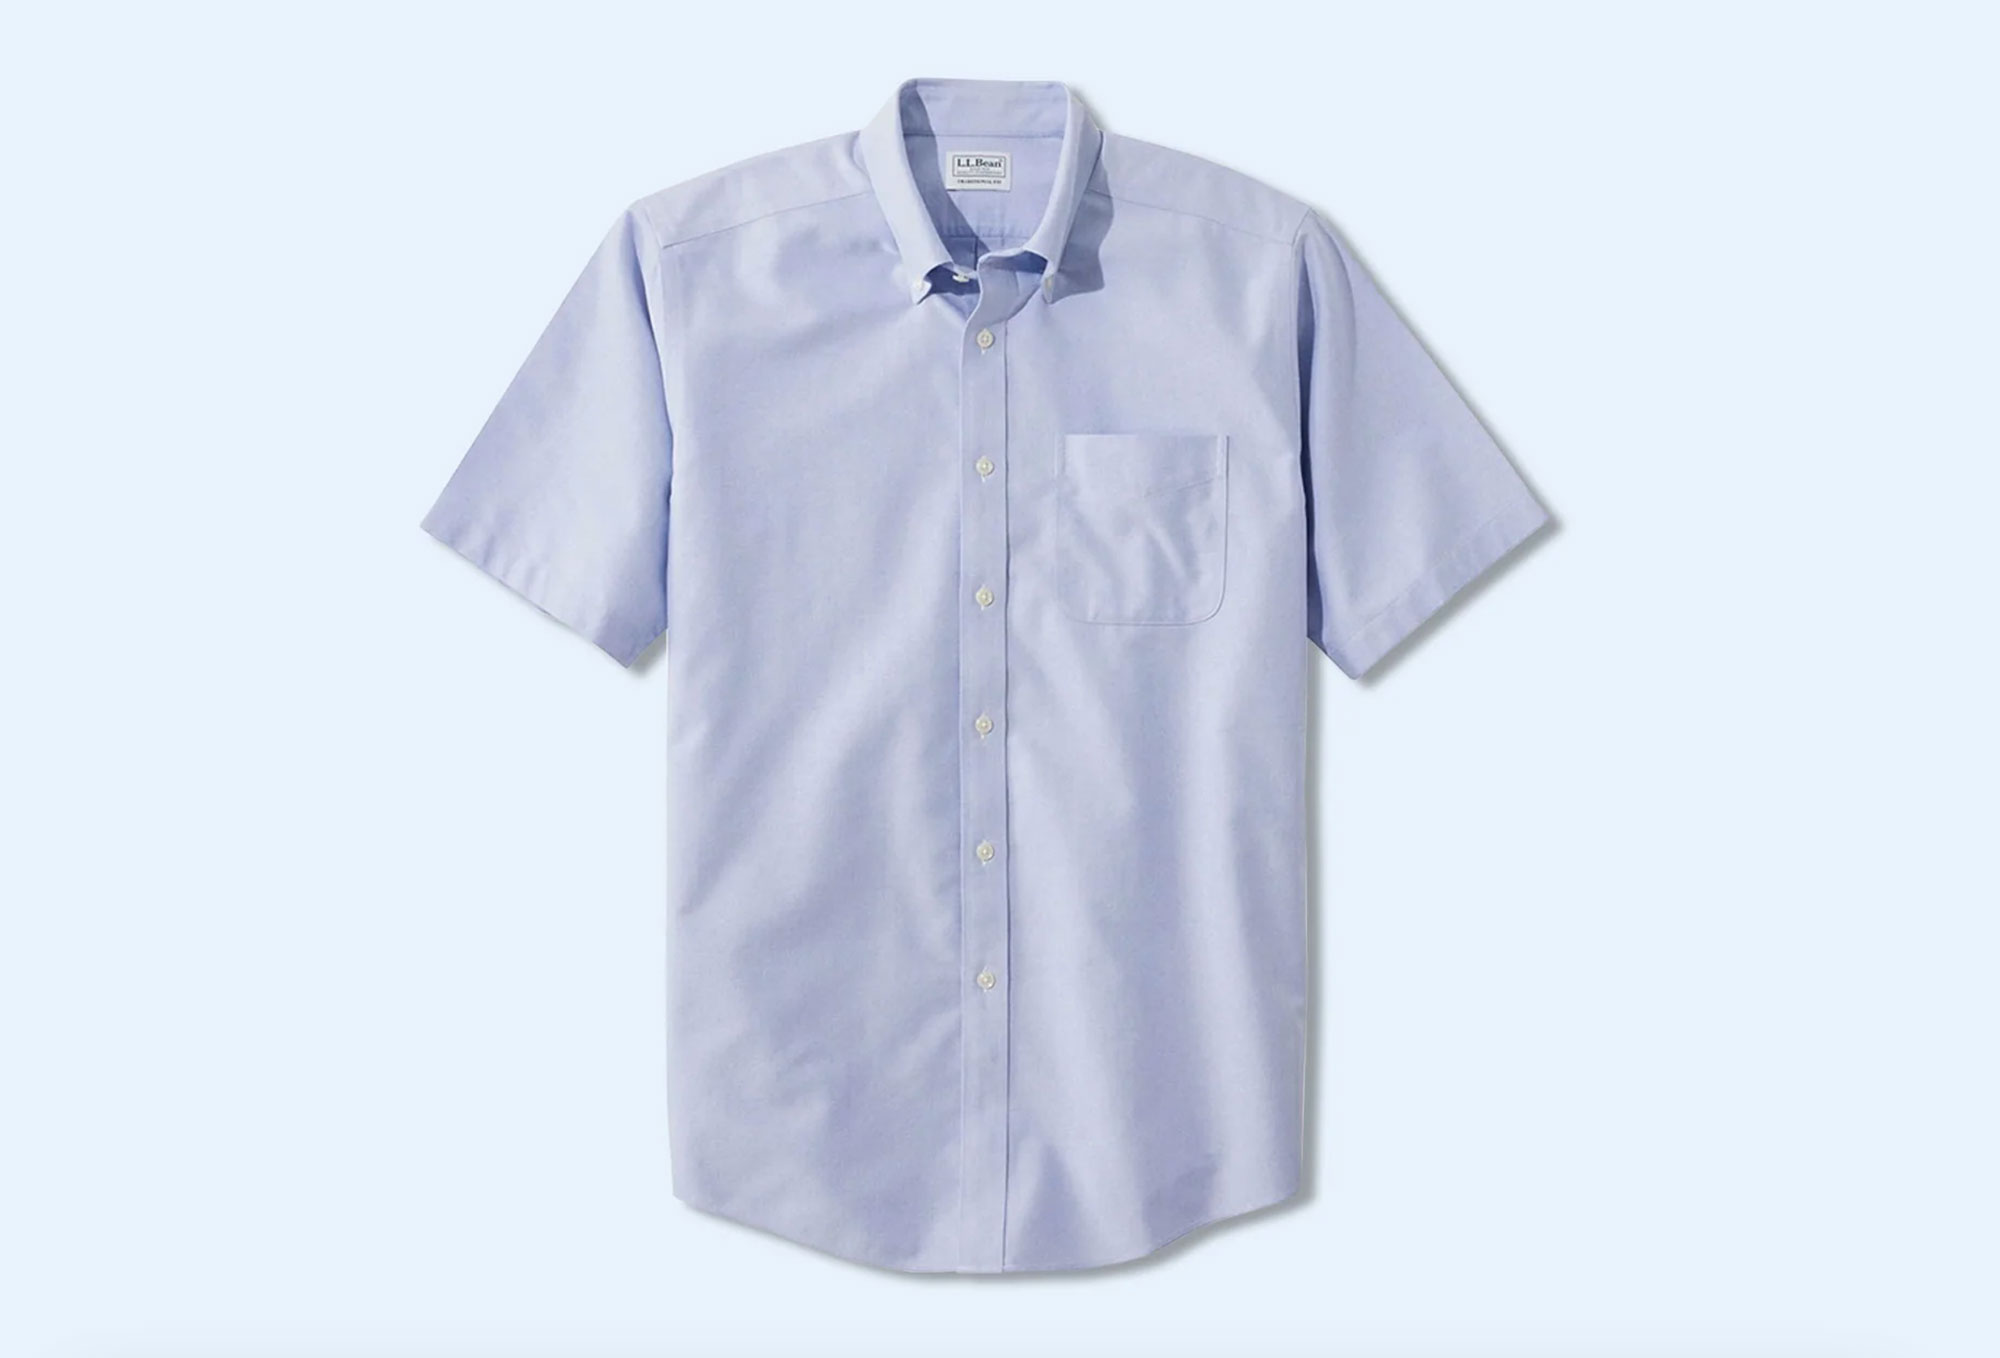 L.L.Bean "Wrinkle-Free Pinpoint Oxford Cloth Shirts"